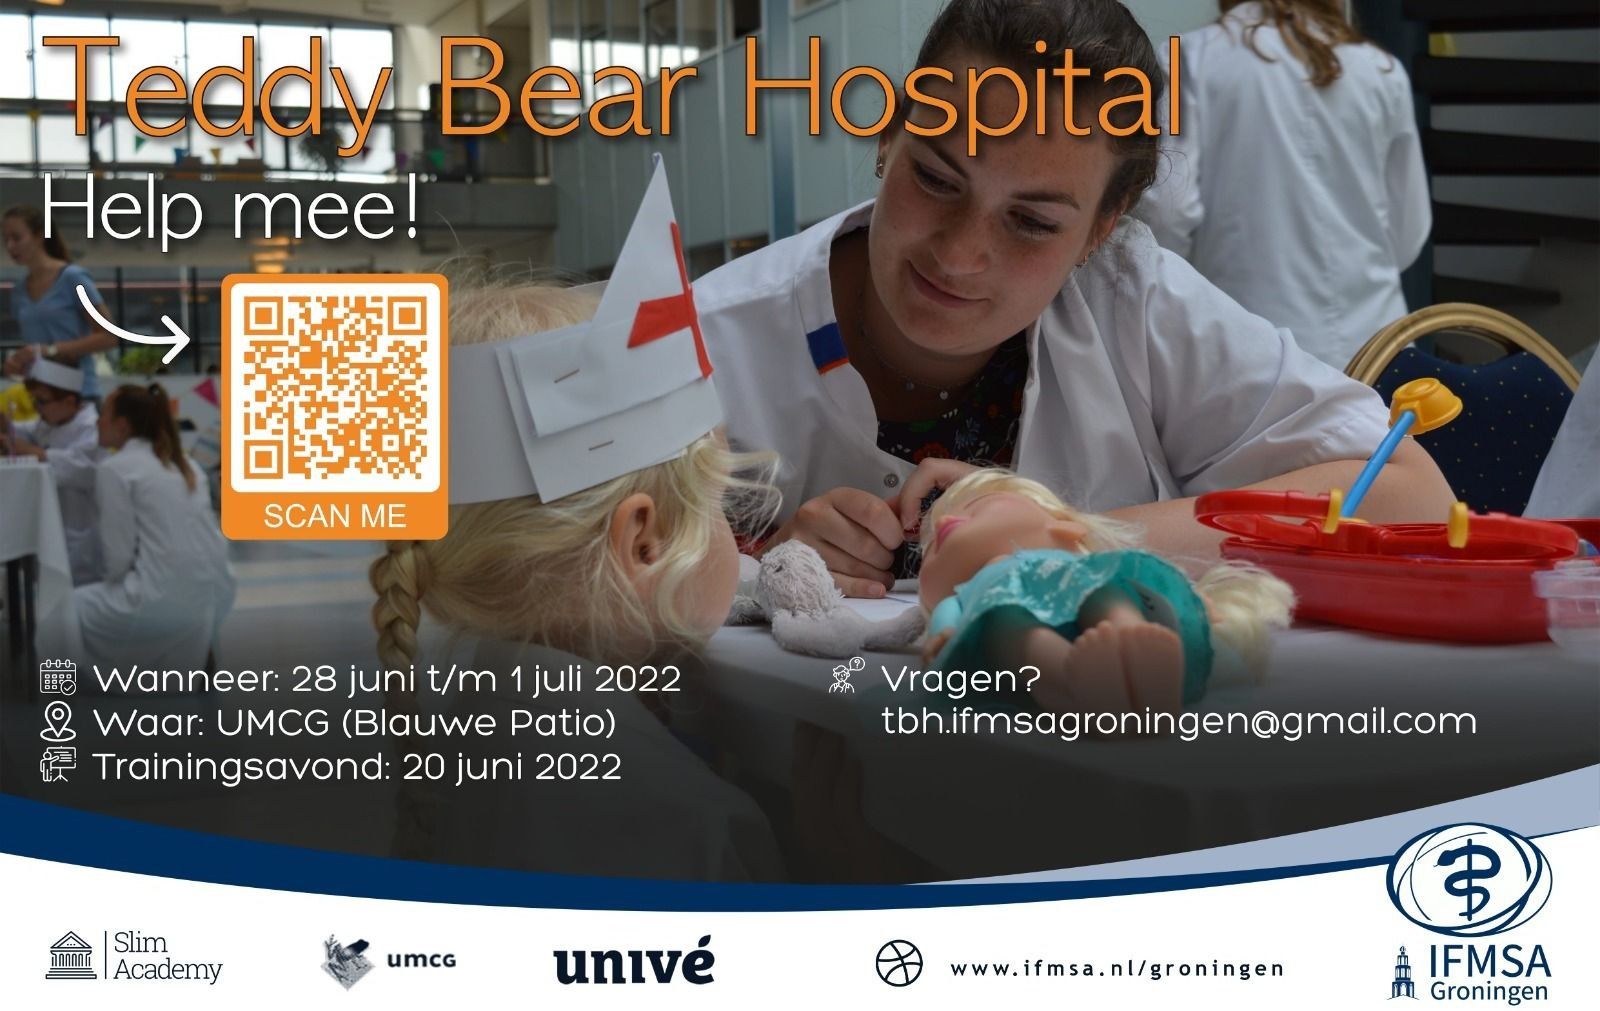 Teddy_Bear_Hospital_-_Promotie_Poster.jpeg